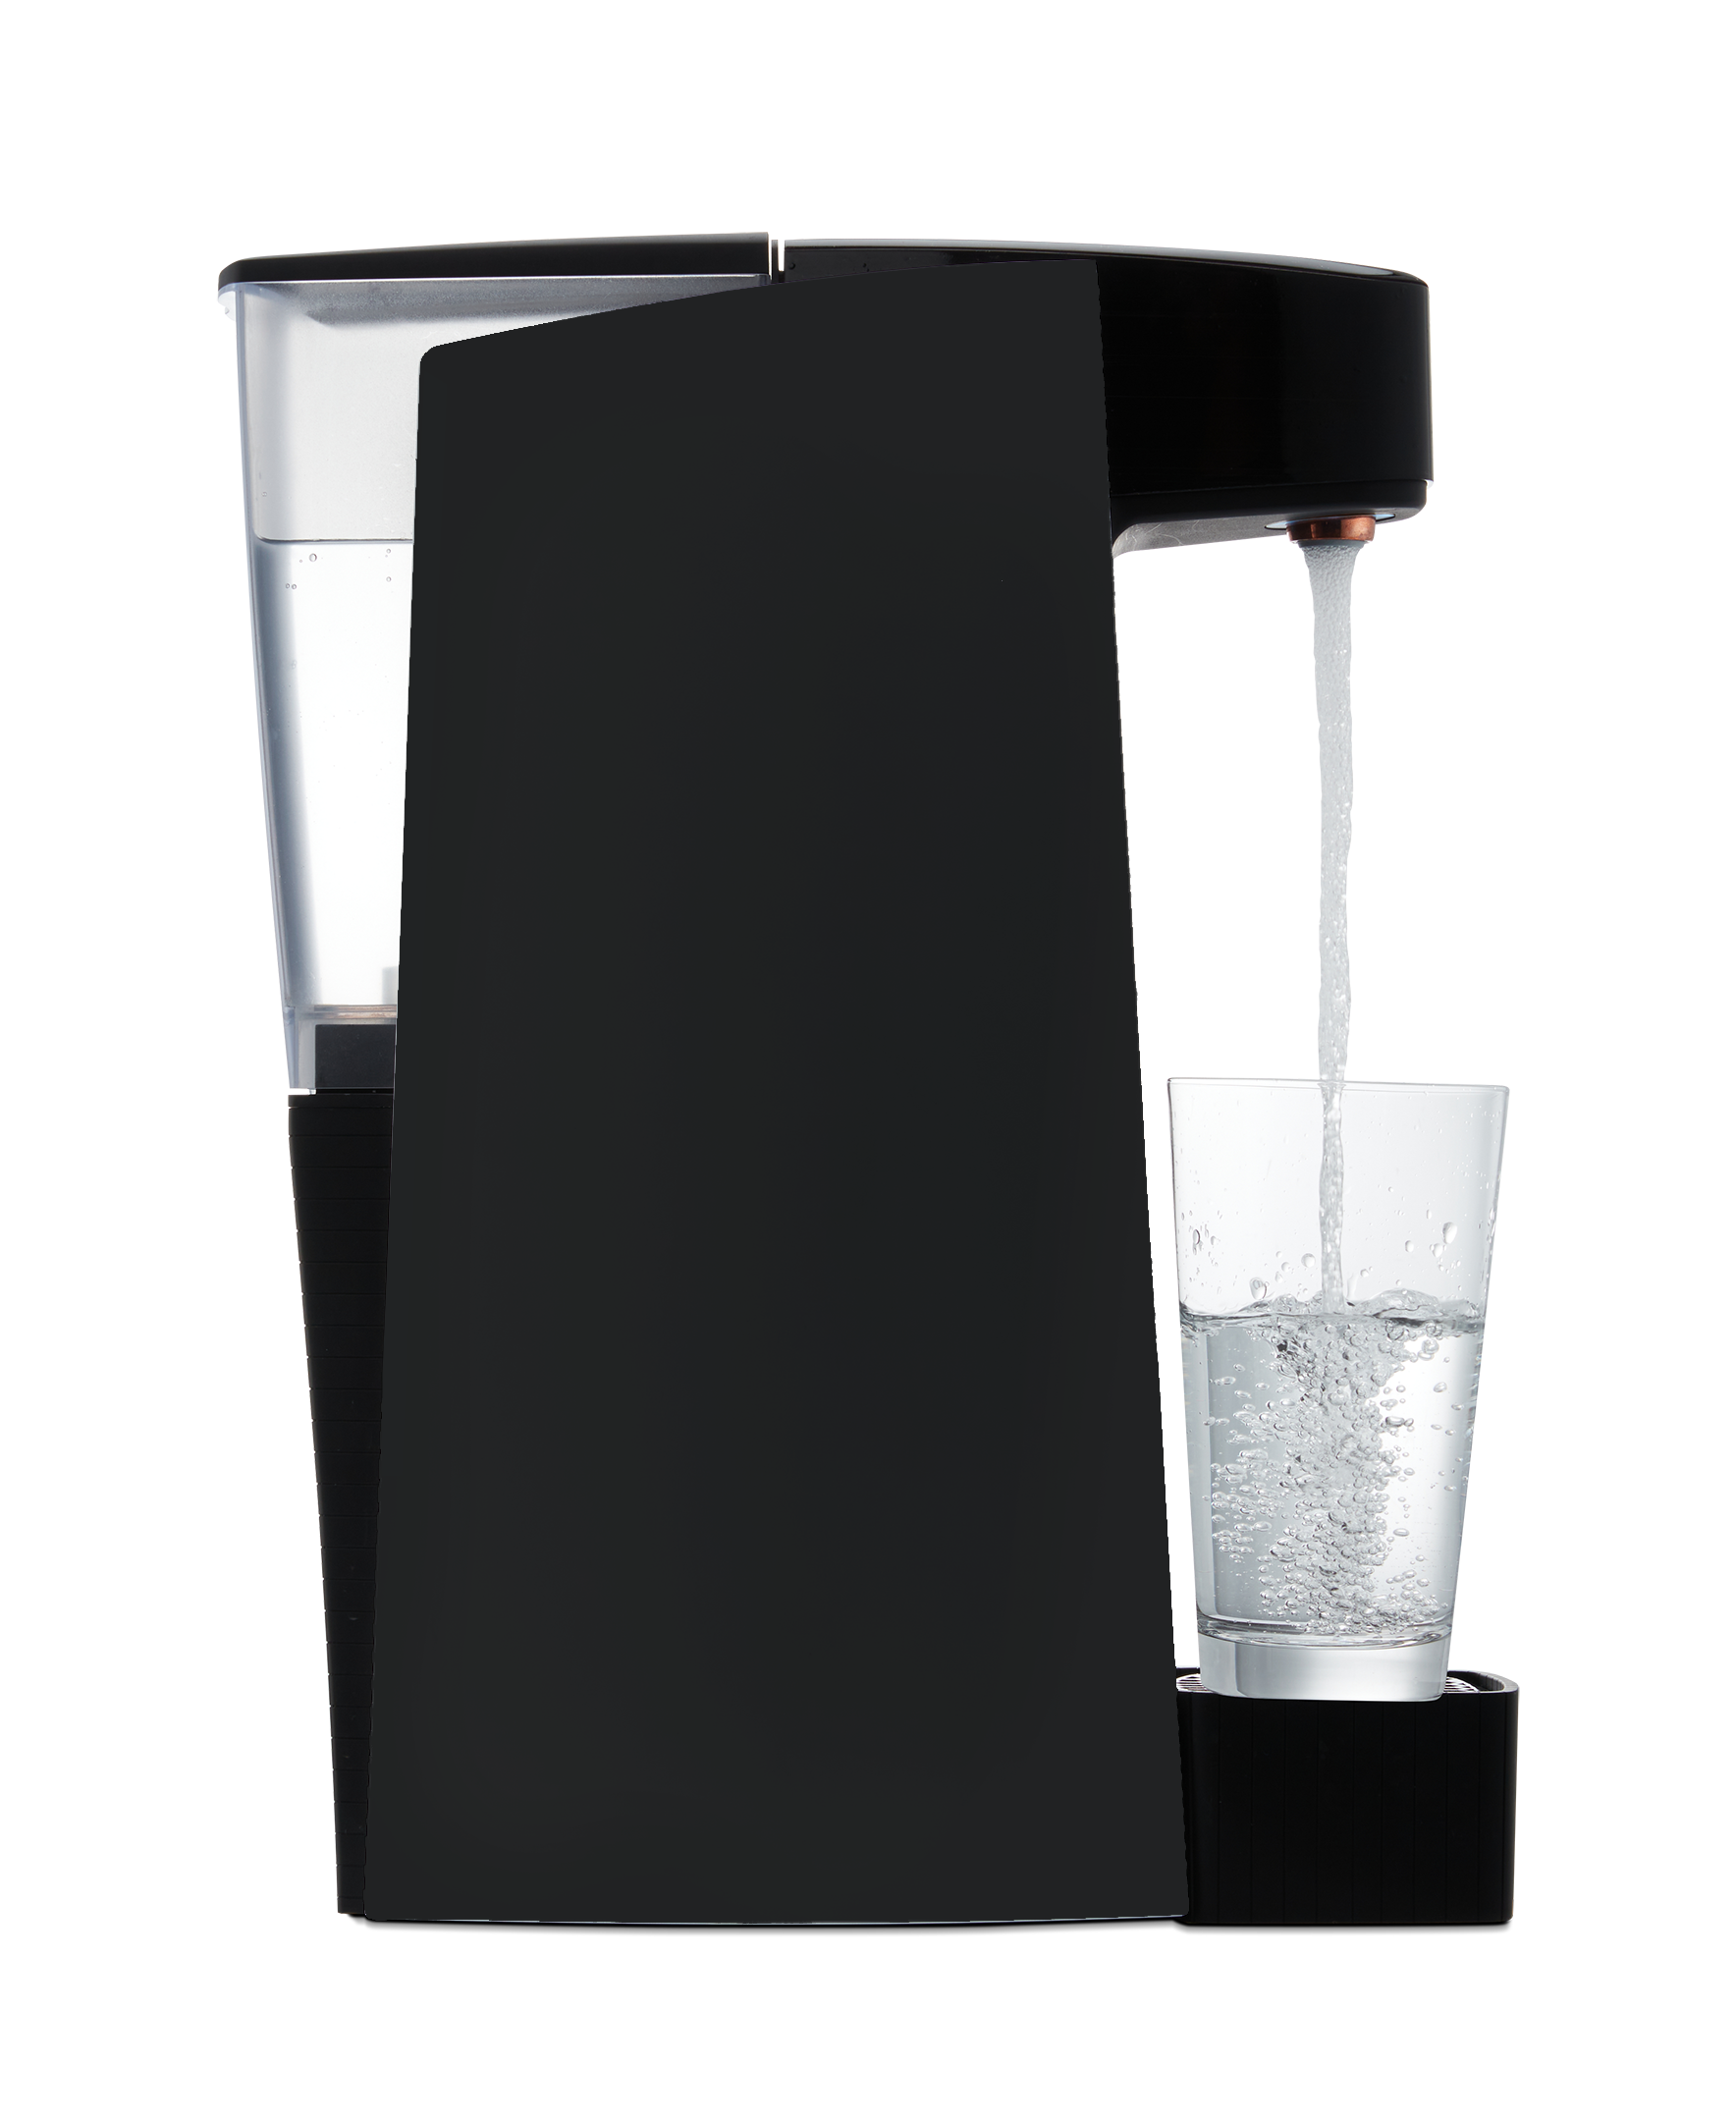 Carbon8 Kit - One Touch Sparkling Water Maker + Filter & Lemon8 + Co2 Cylinder